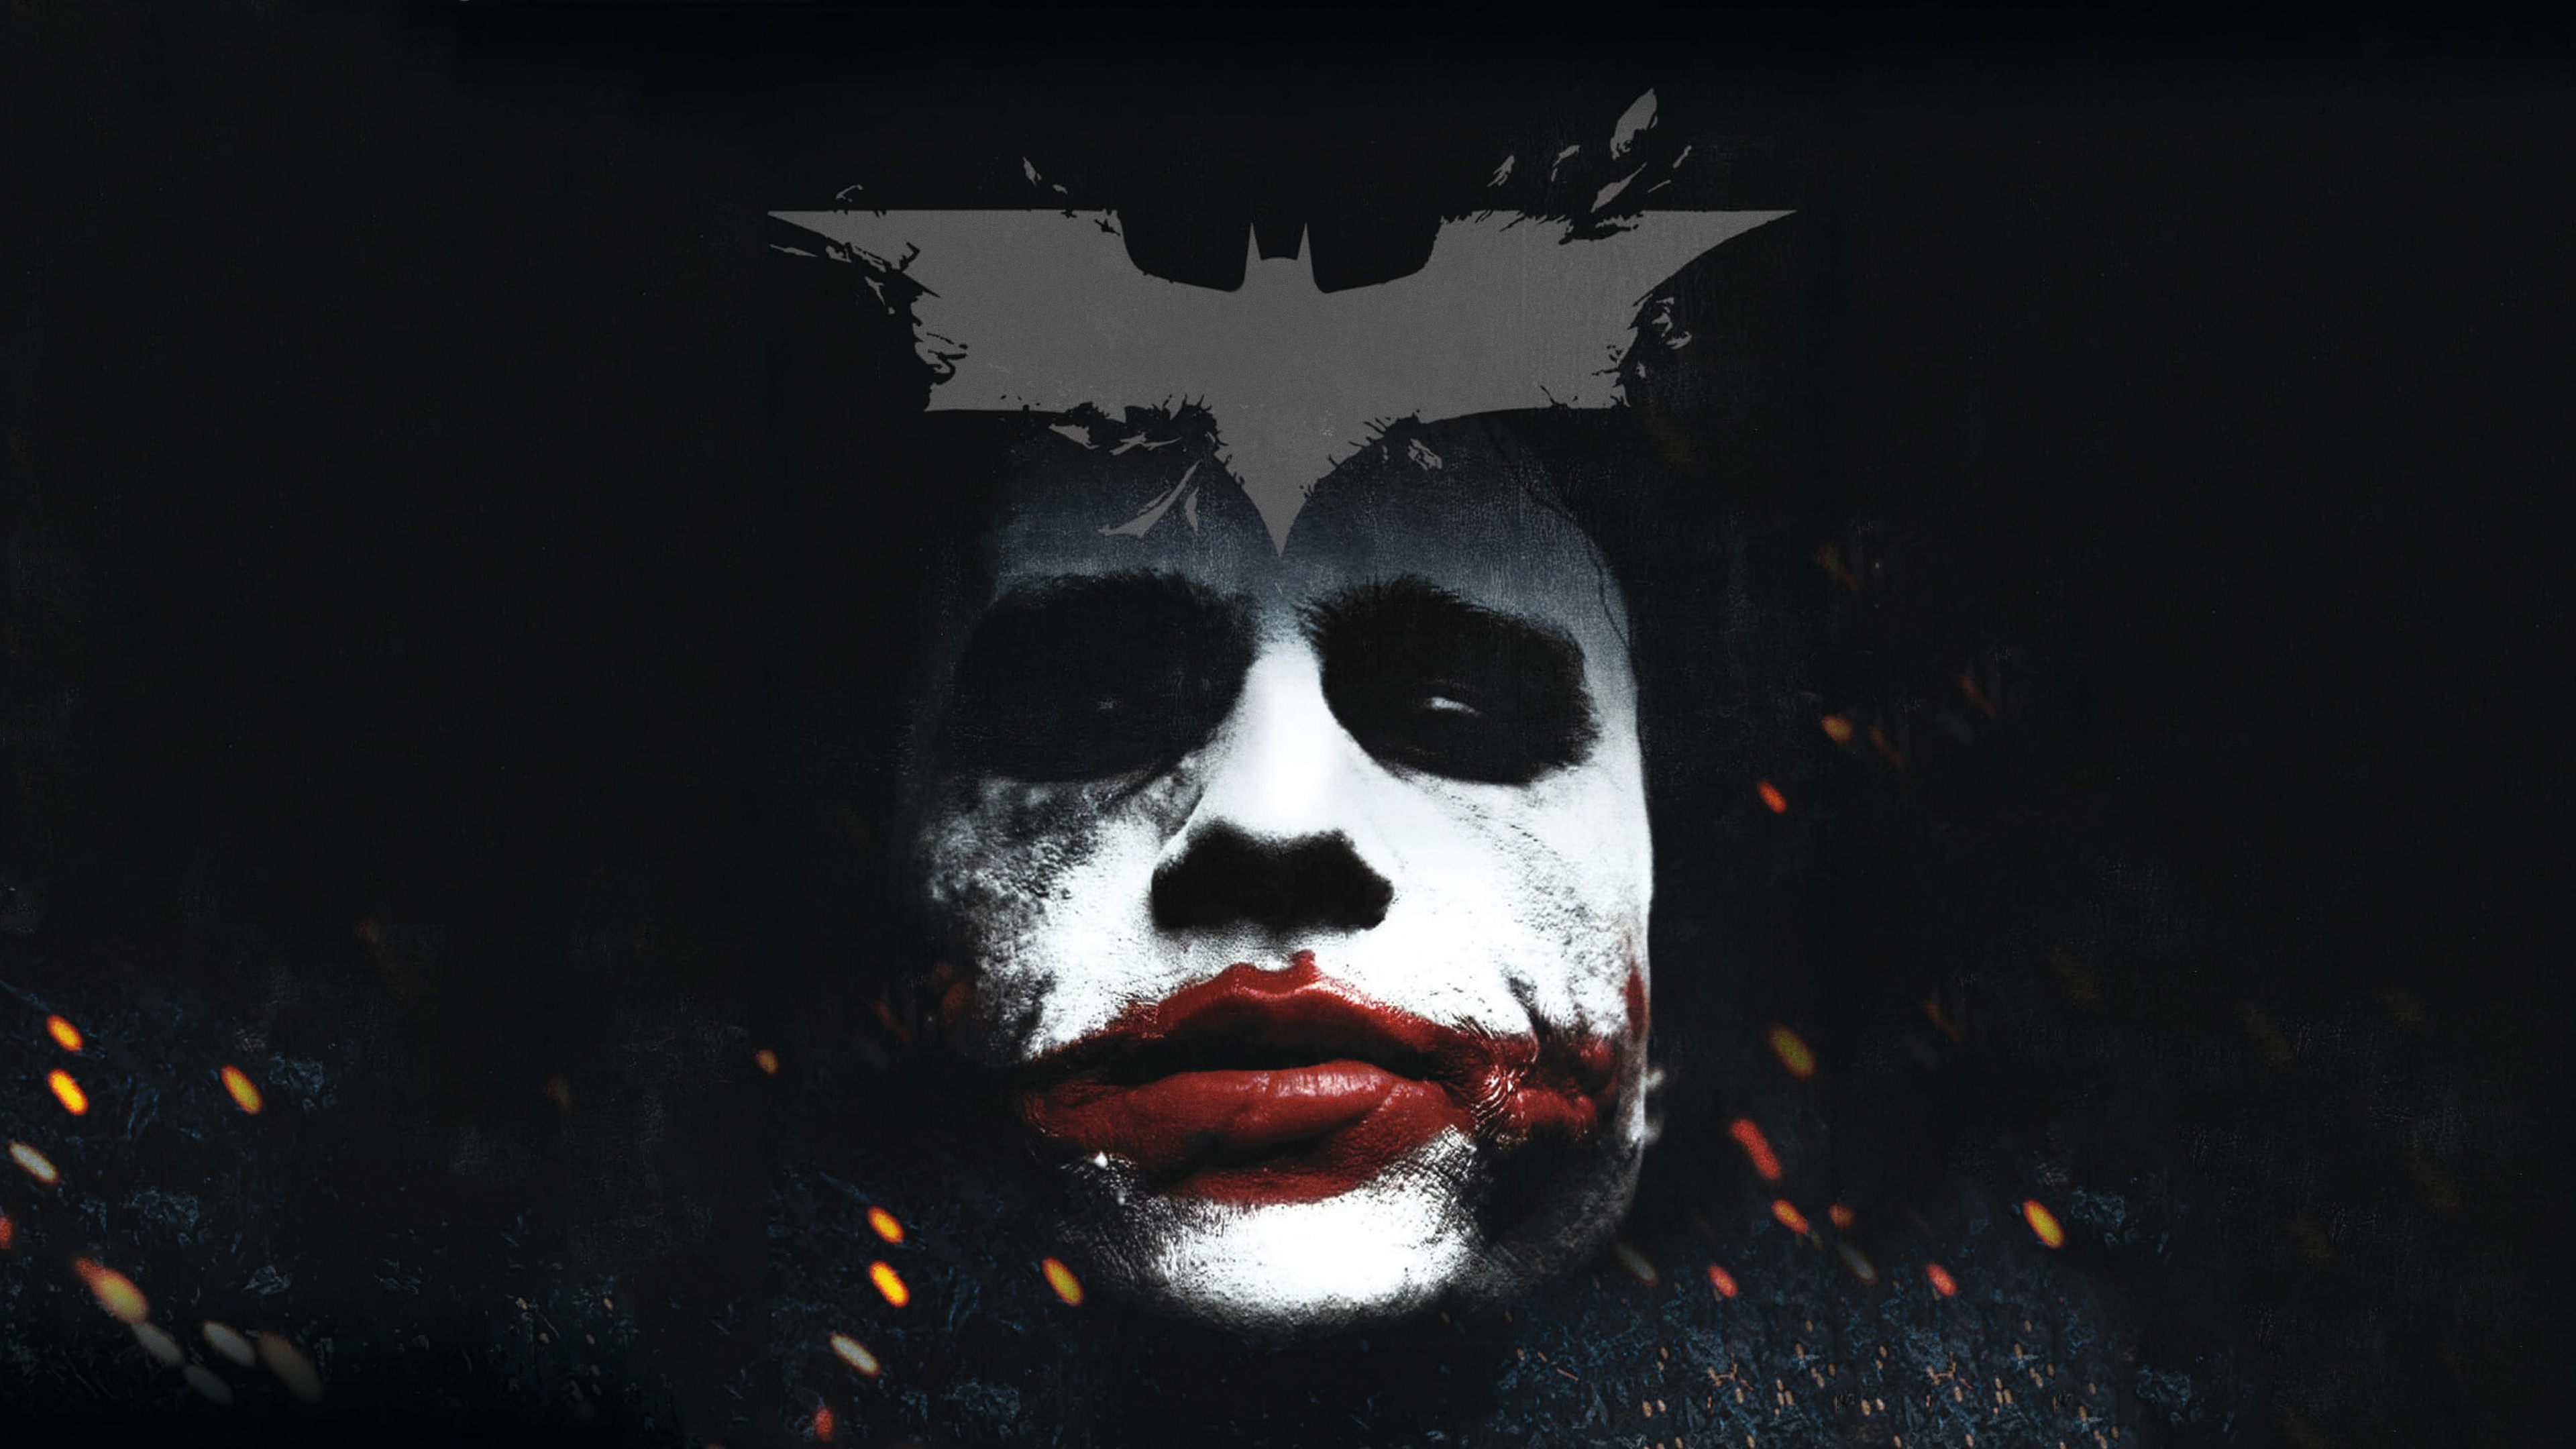 Joker dark knight full hd wallpaper download - lalapastage